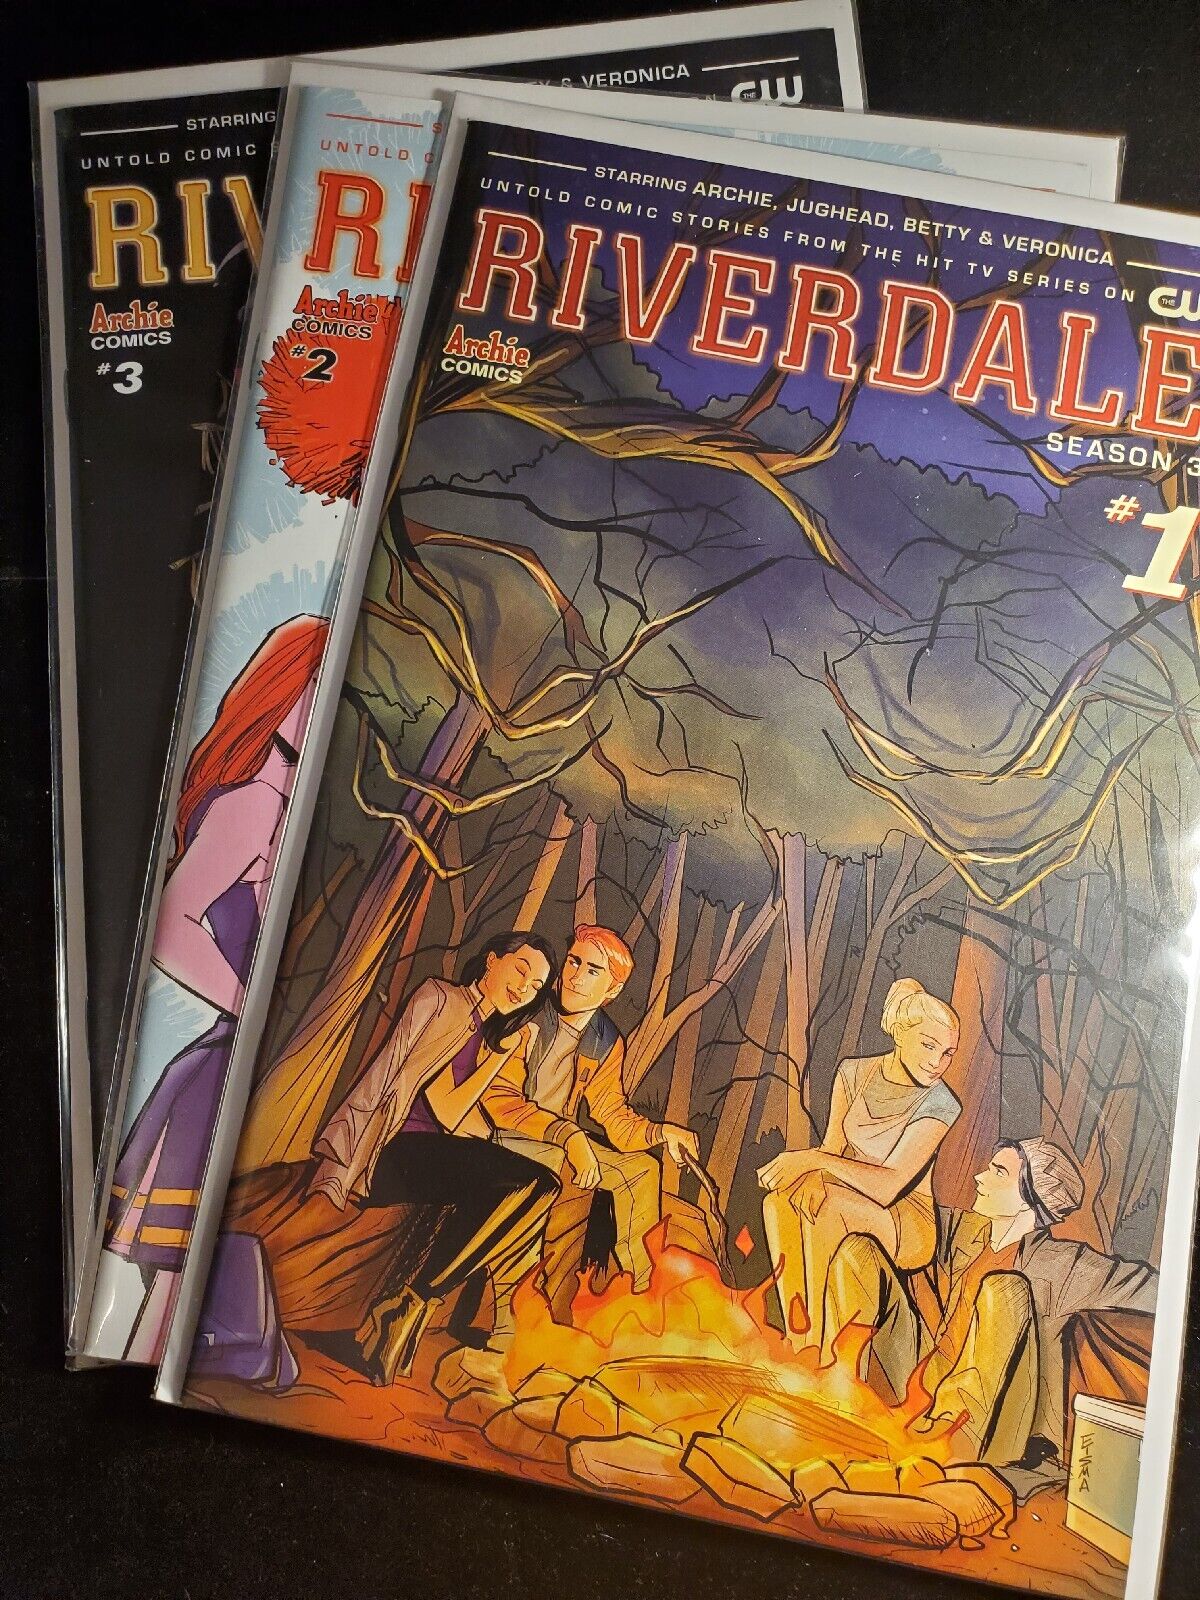 RIVERDALE SEASON 3 Issues 1-3, Archie Comics, Jughead/Betty 2019